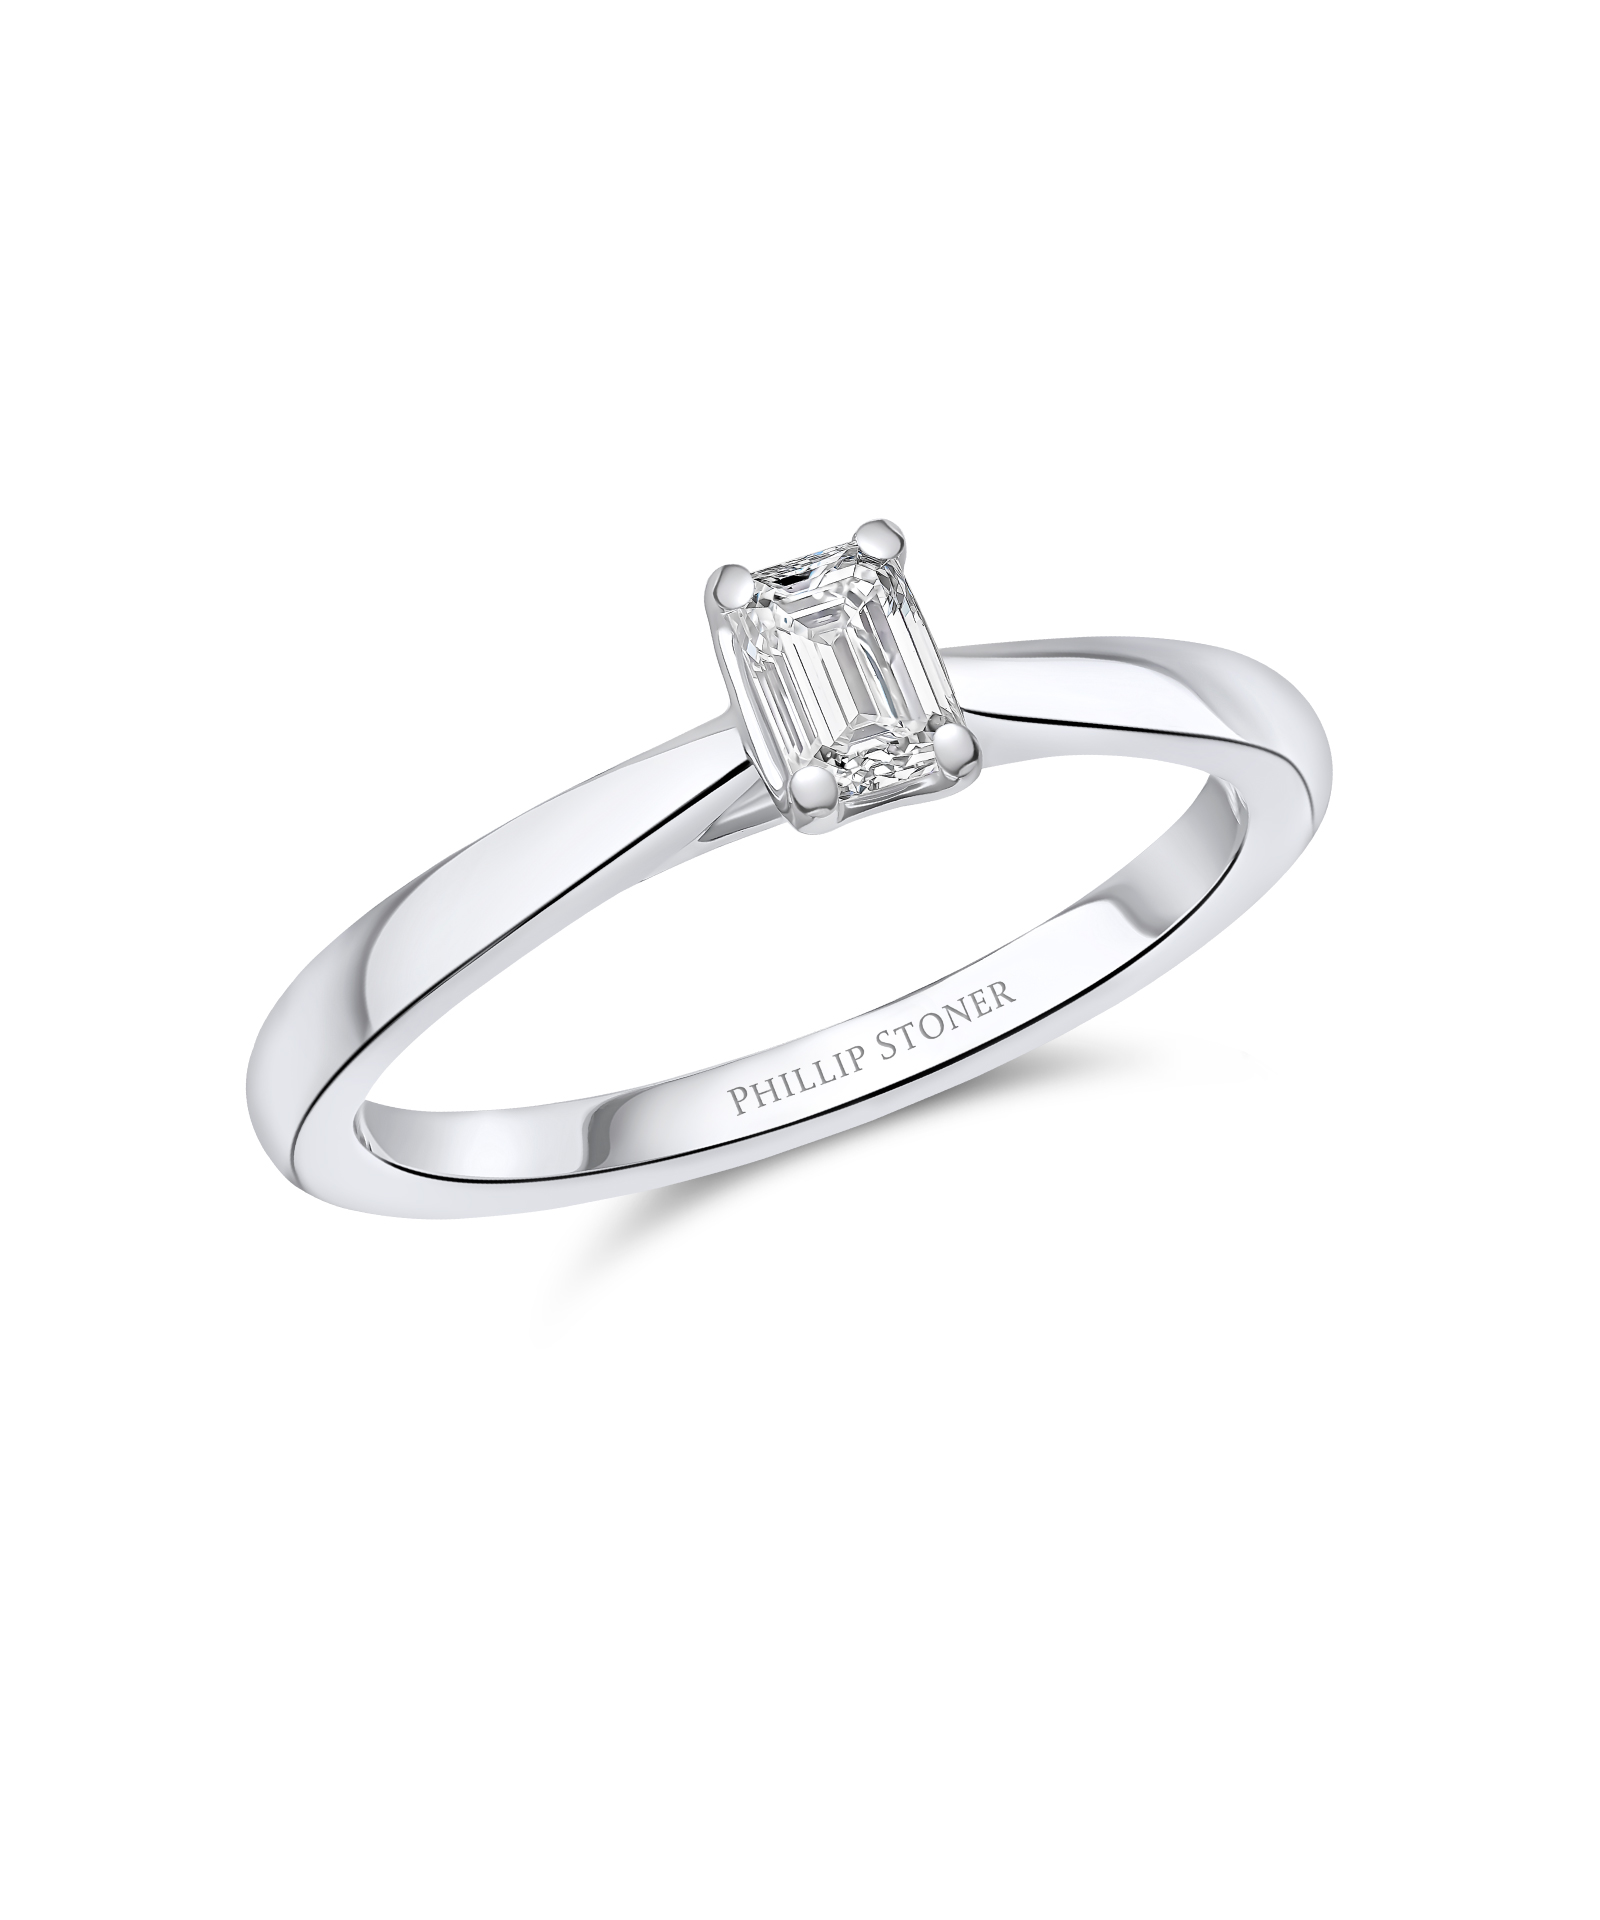 0.30ct Emerald Cut Diamond Solitaire Engagement Ring - Phillip Stoner The Jeweller